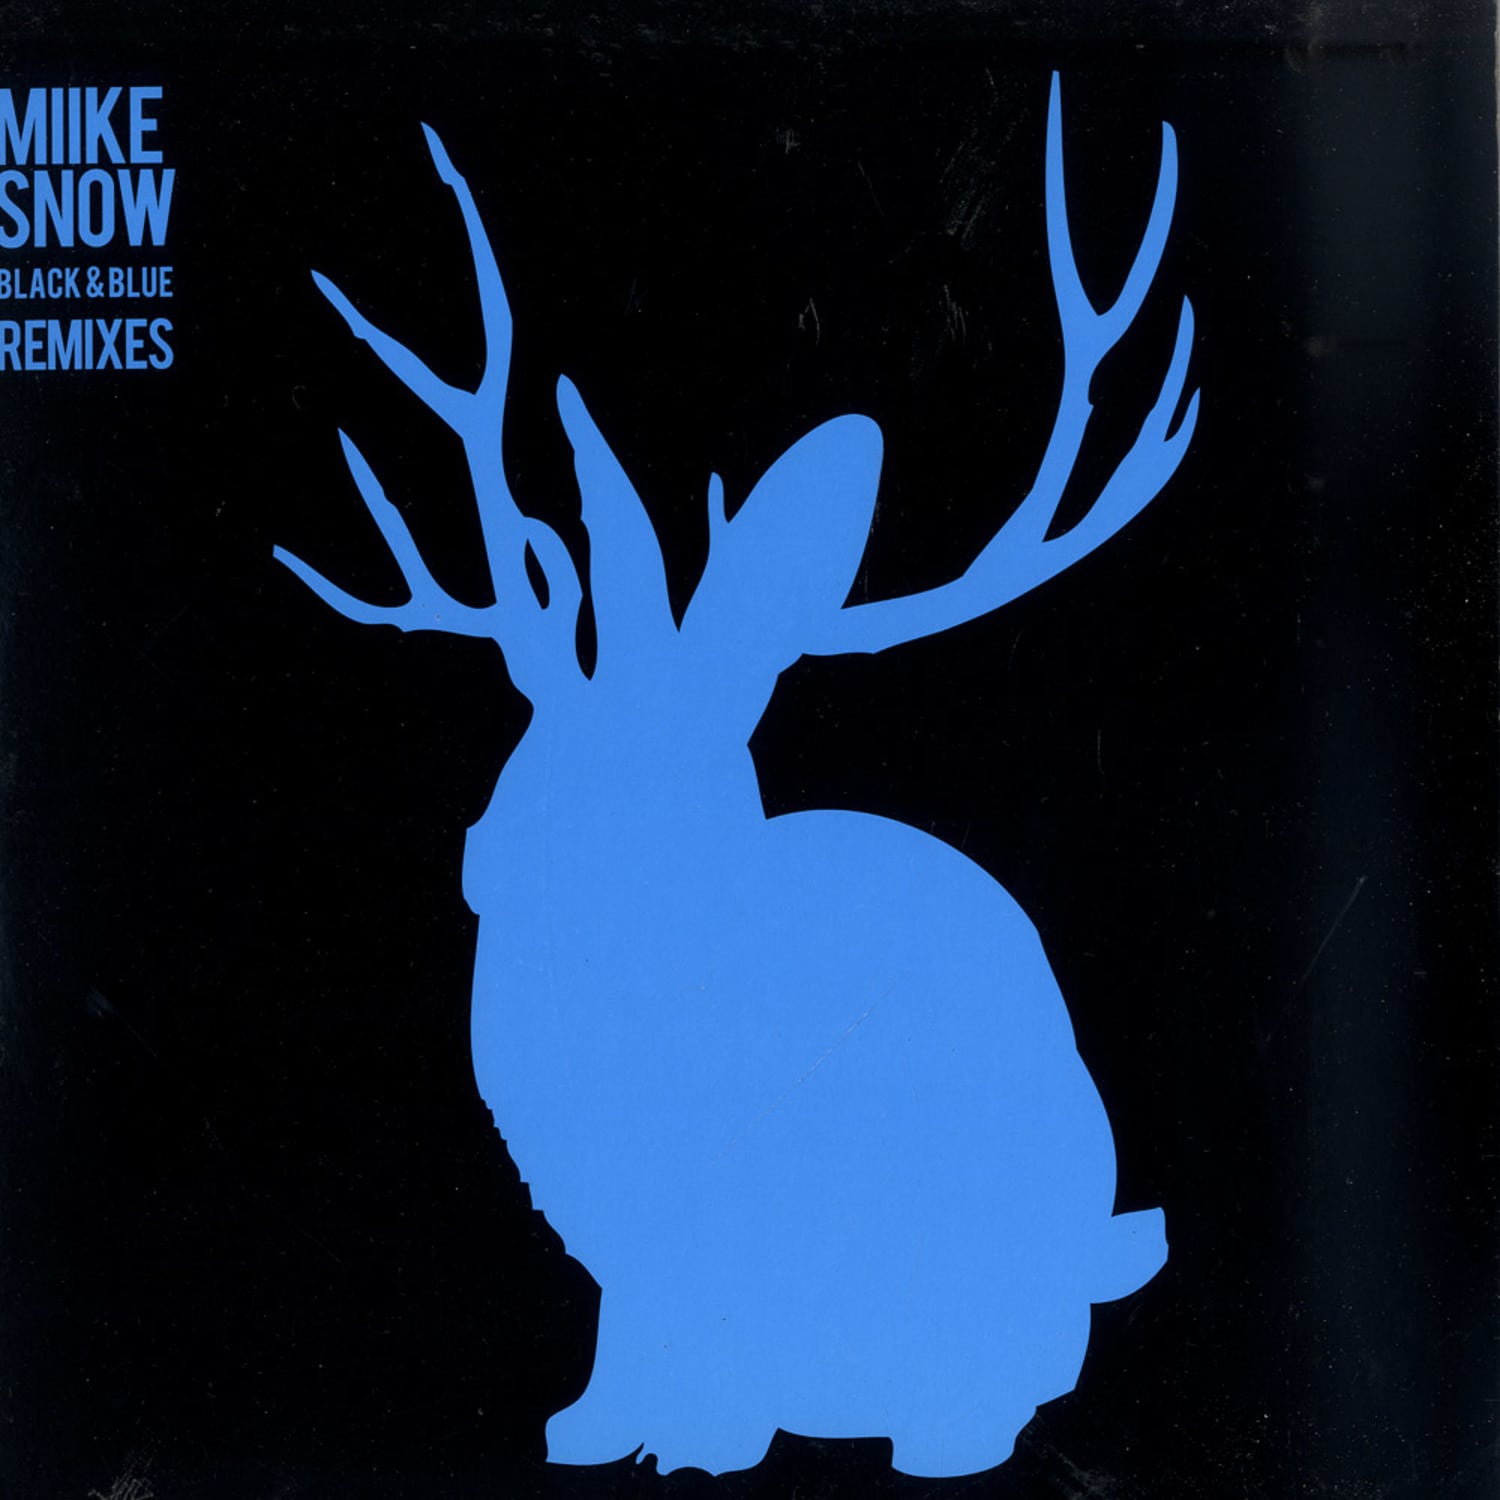 Miike Snow - BLACK & BLUE REMIXES